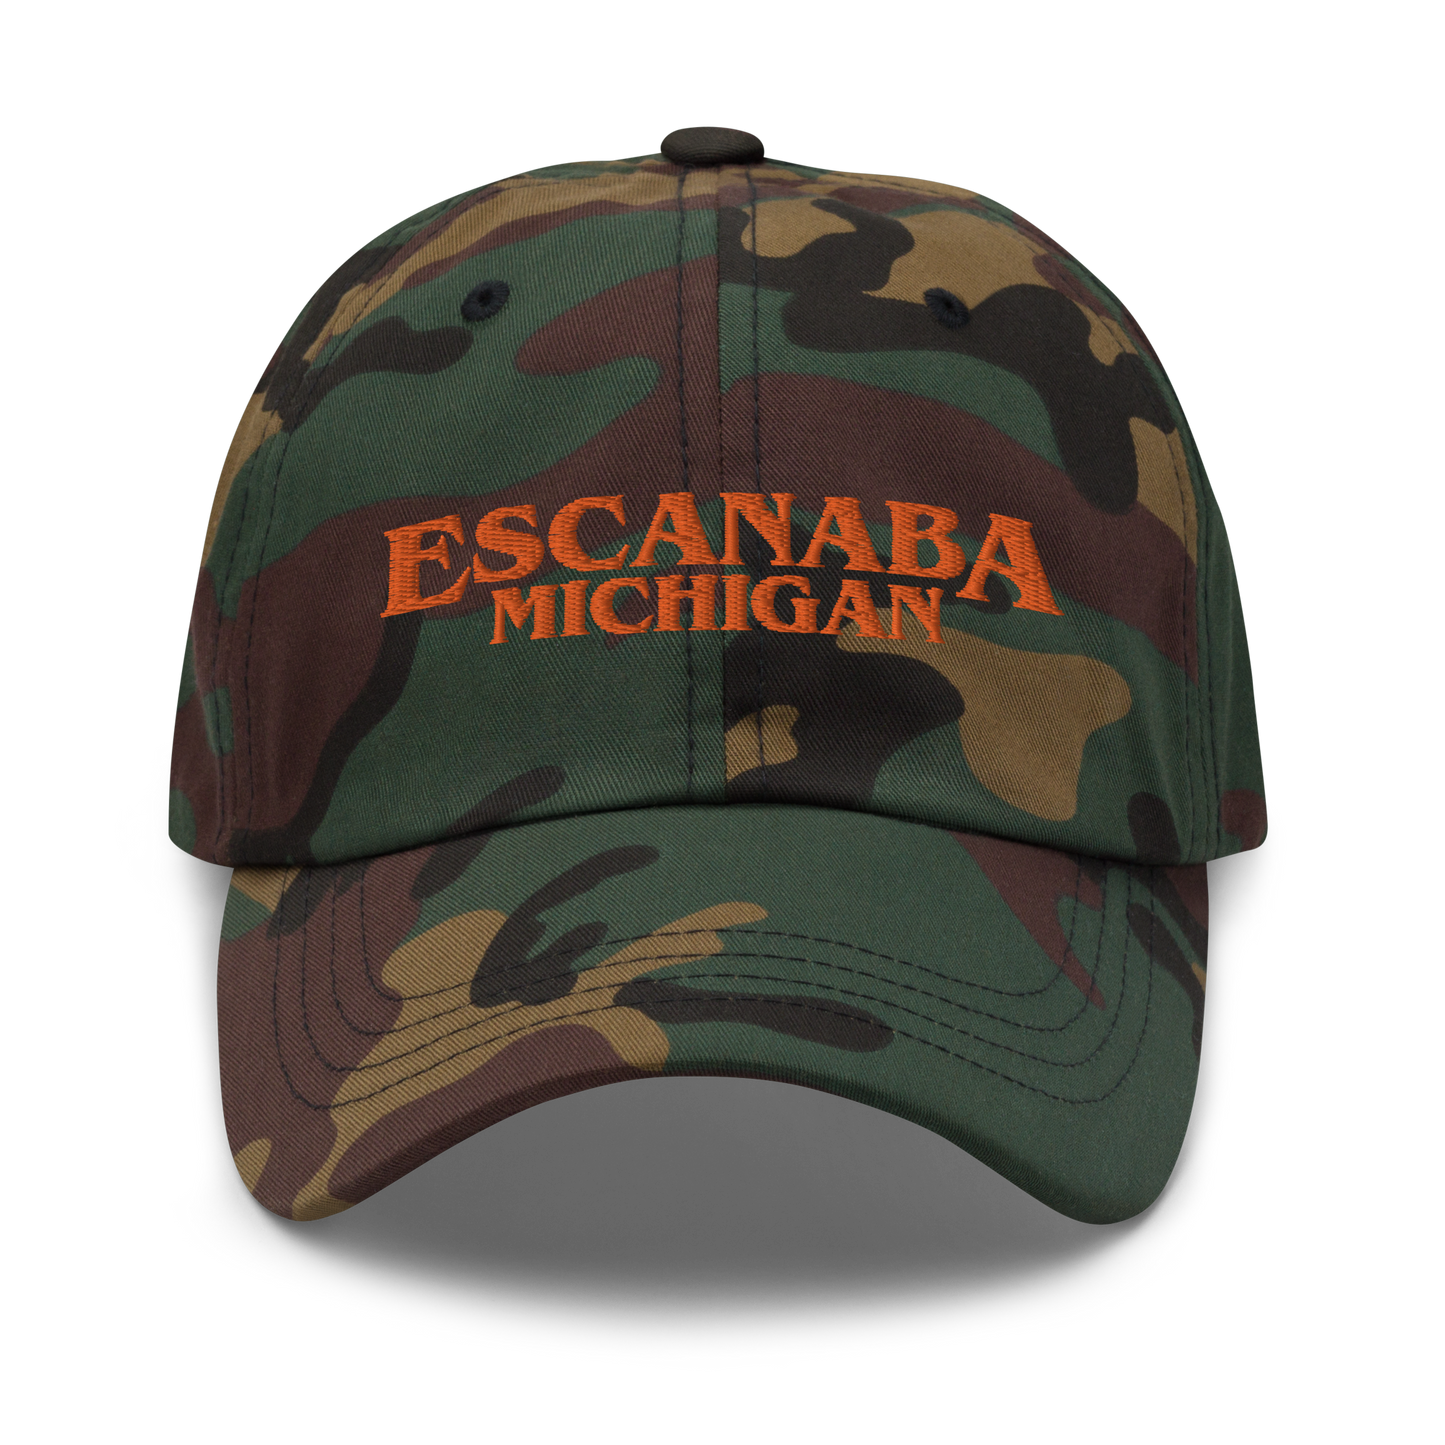 'Escanaba Michigan' Camouflage Cap (1980s Drama Parody)